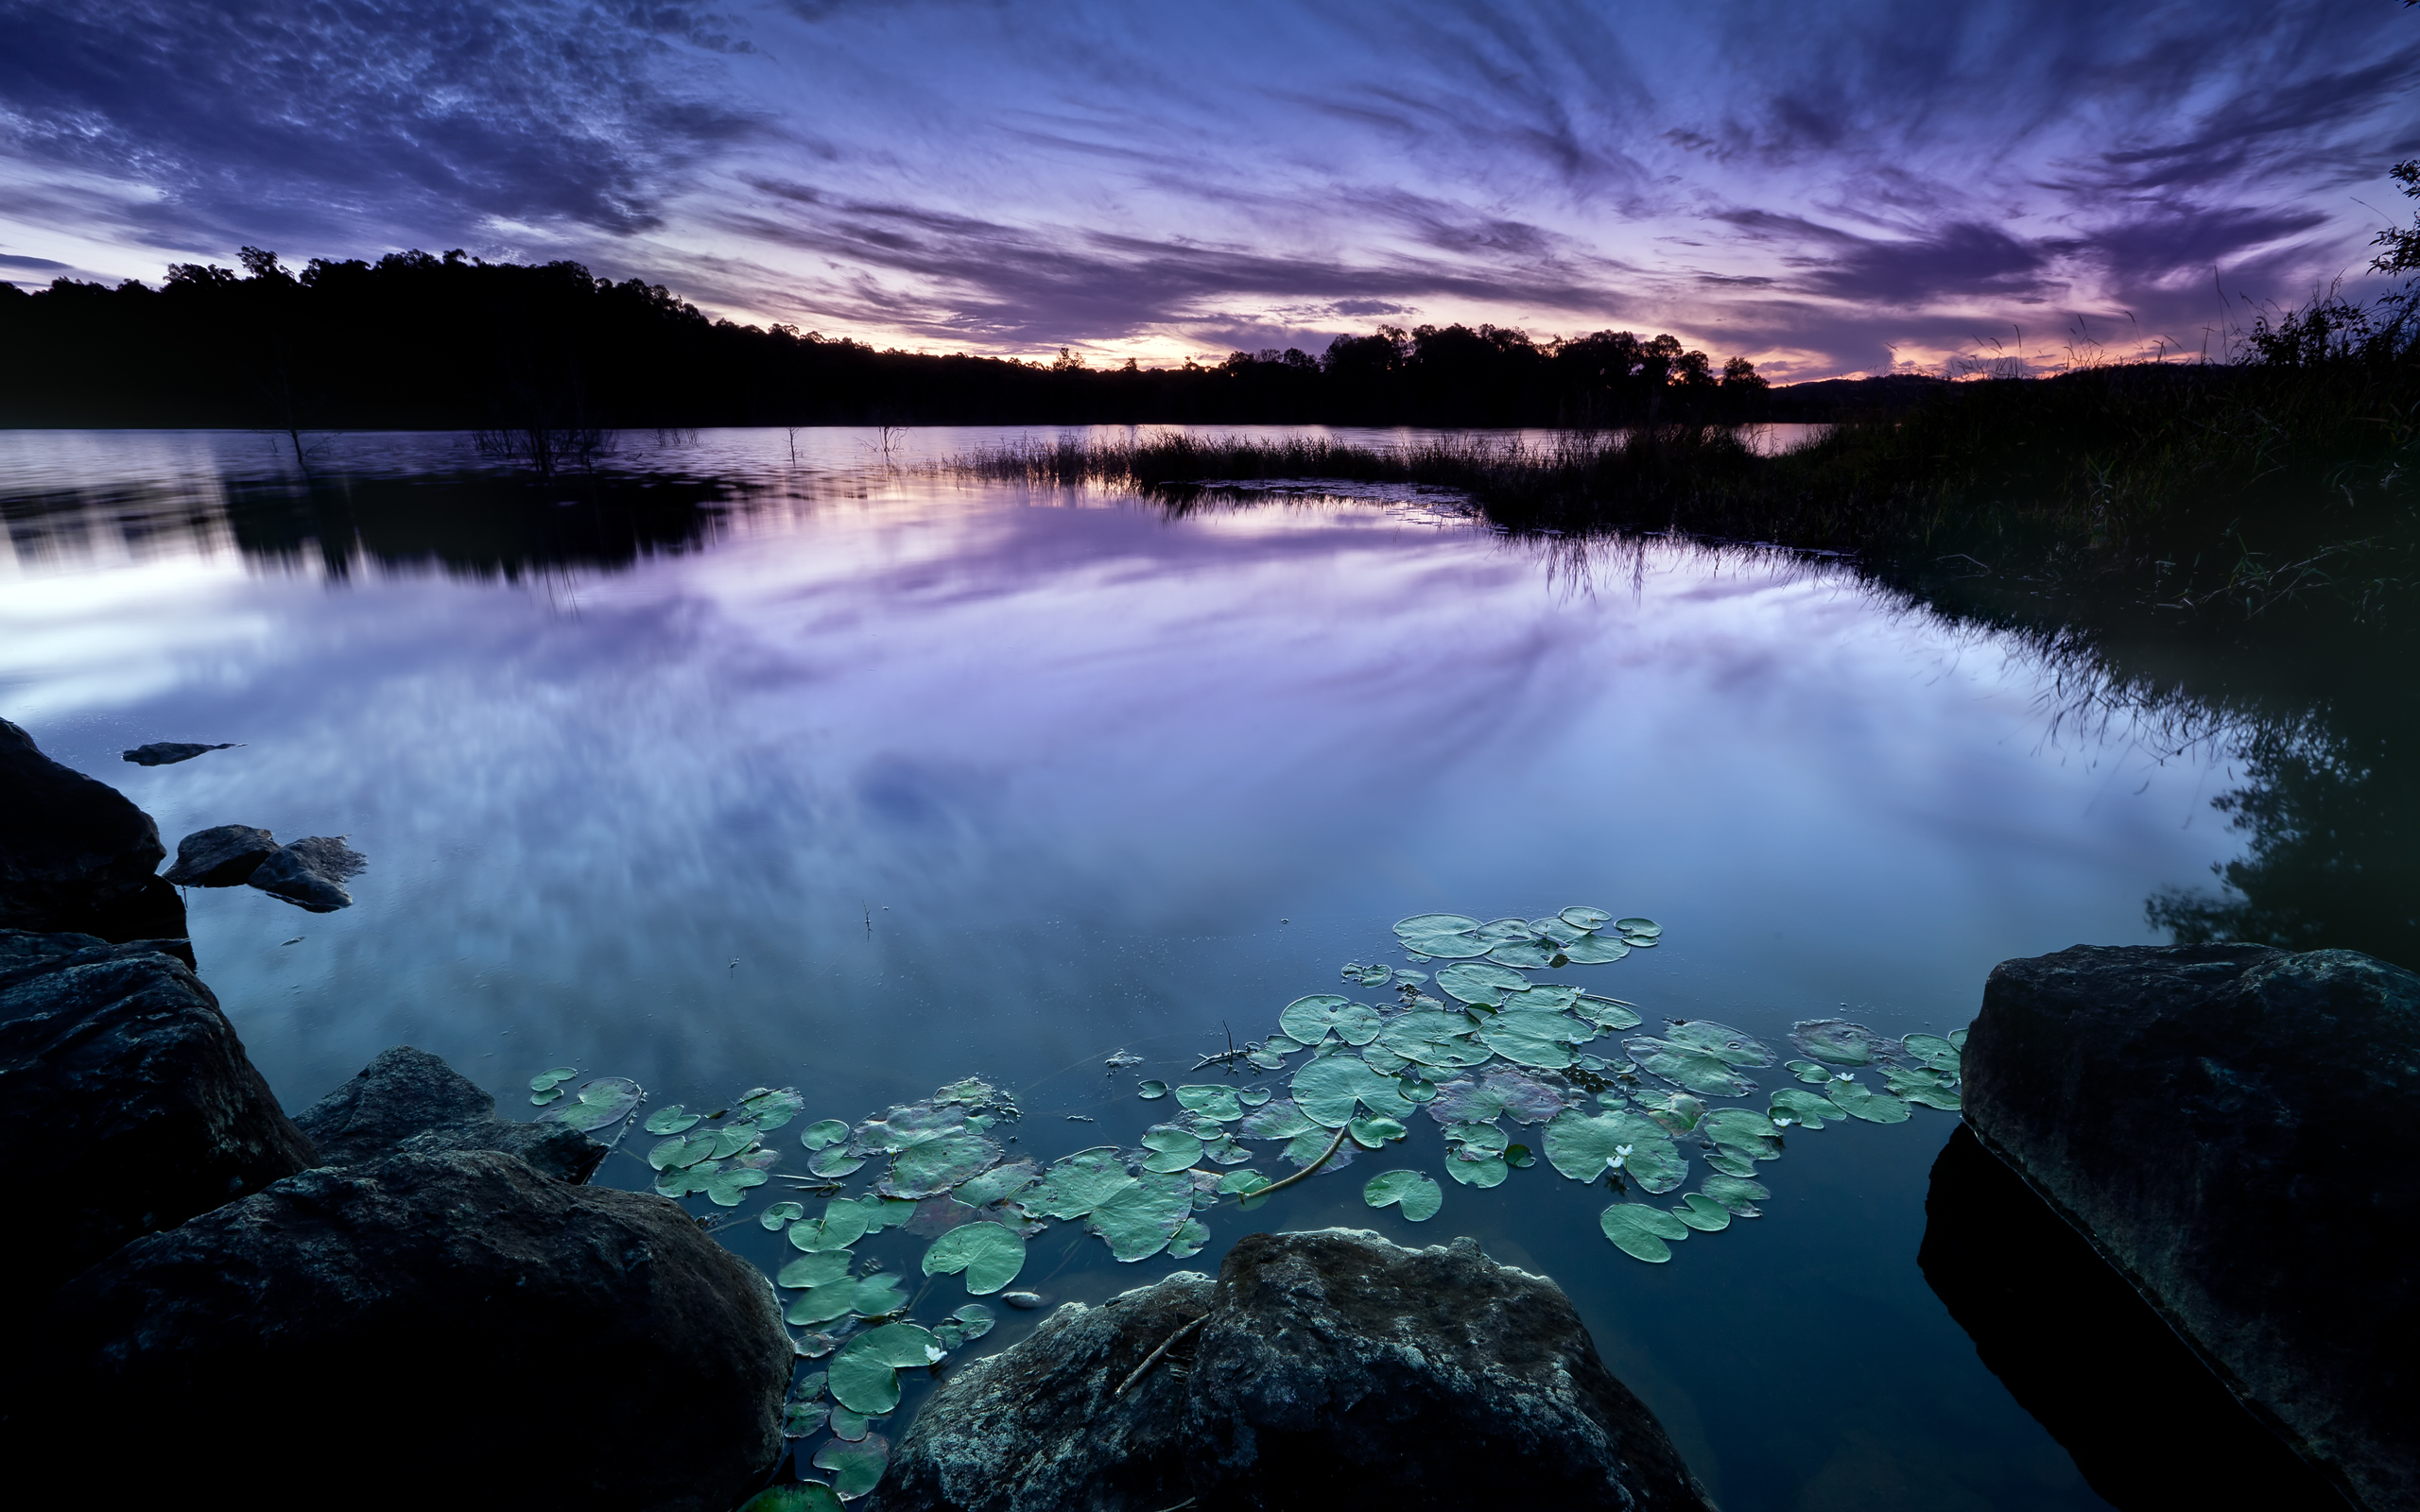 Crystal Lake, HD Nature, 4k Wallpaper, Image, Background, Photo